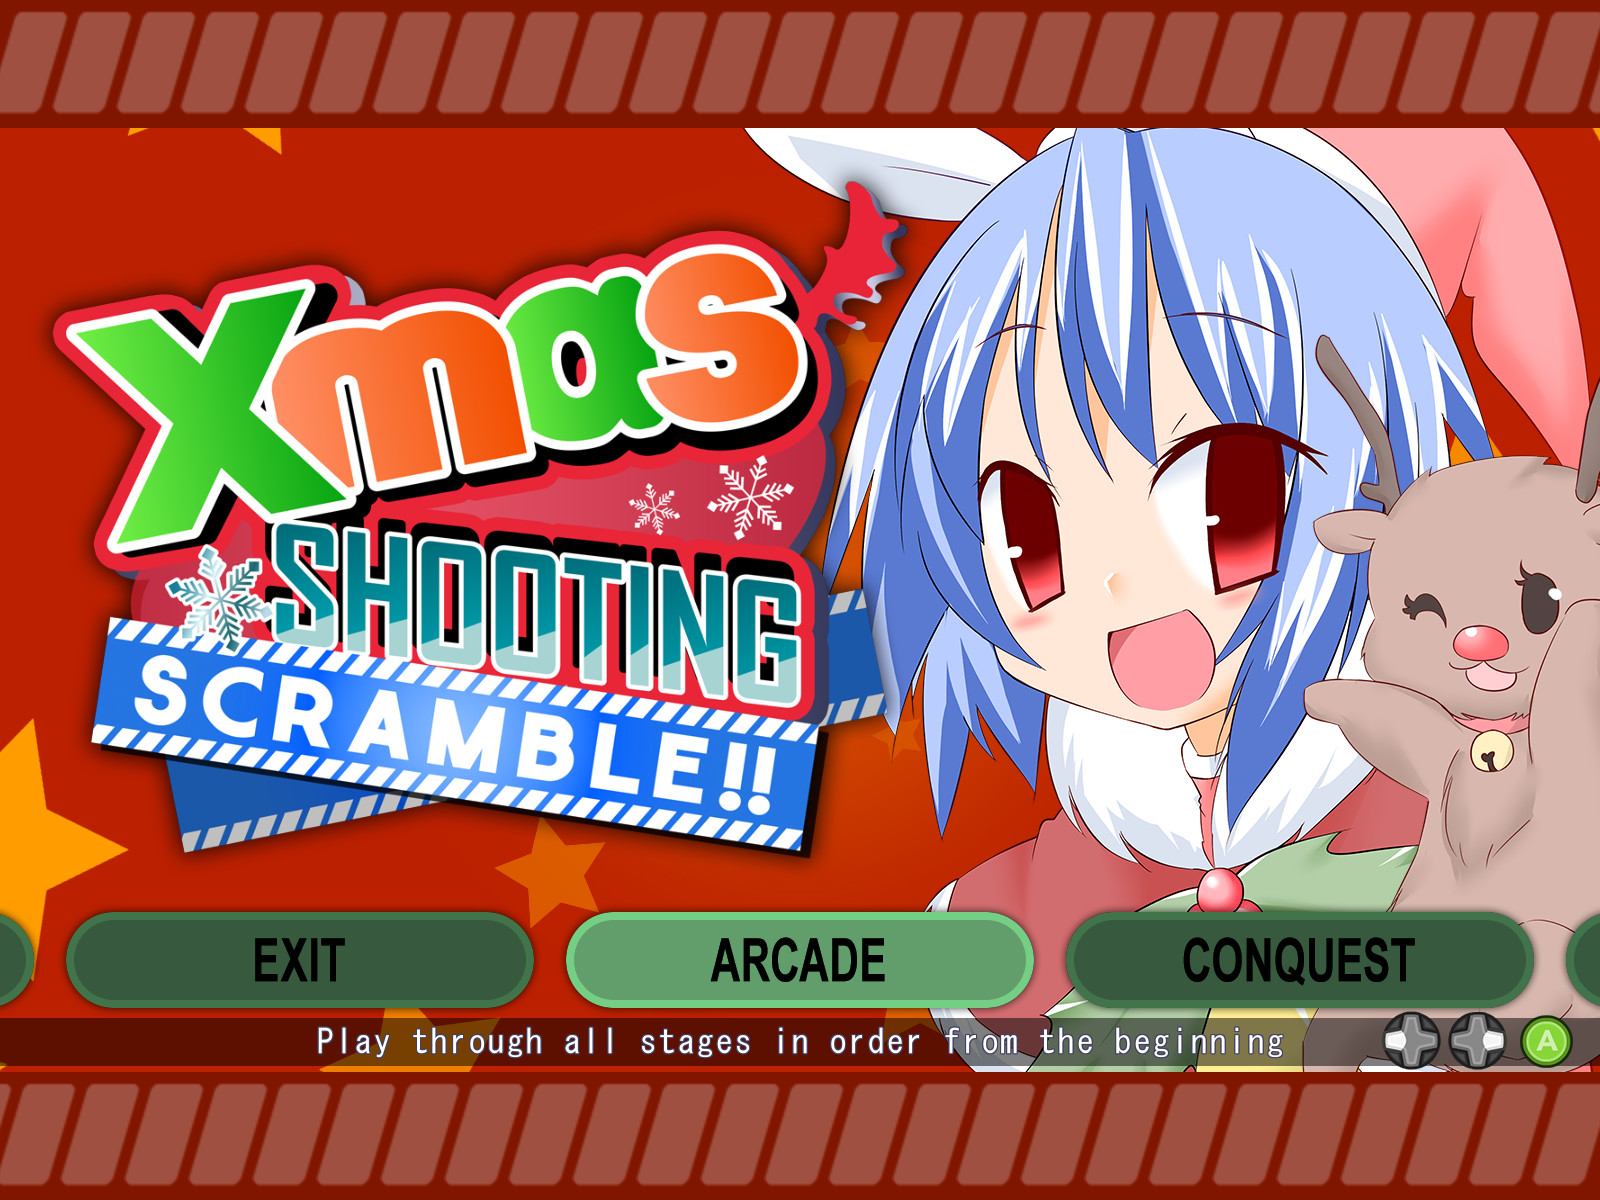 Xmas Shooting - Scramble!! screenshot